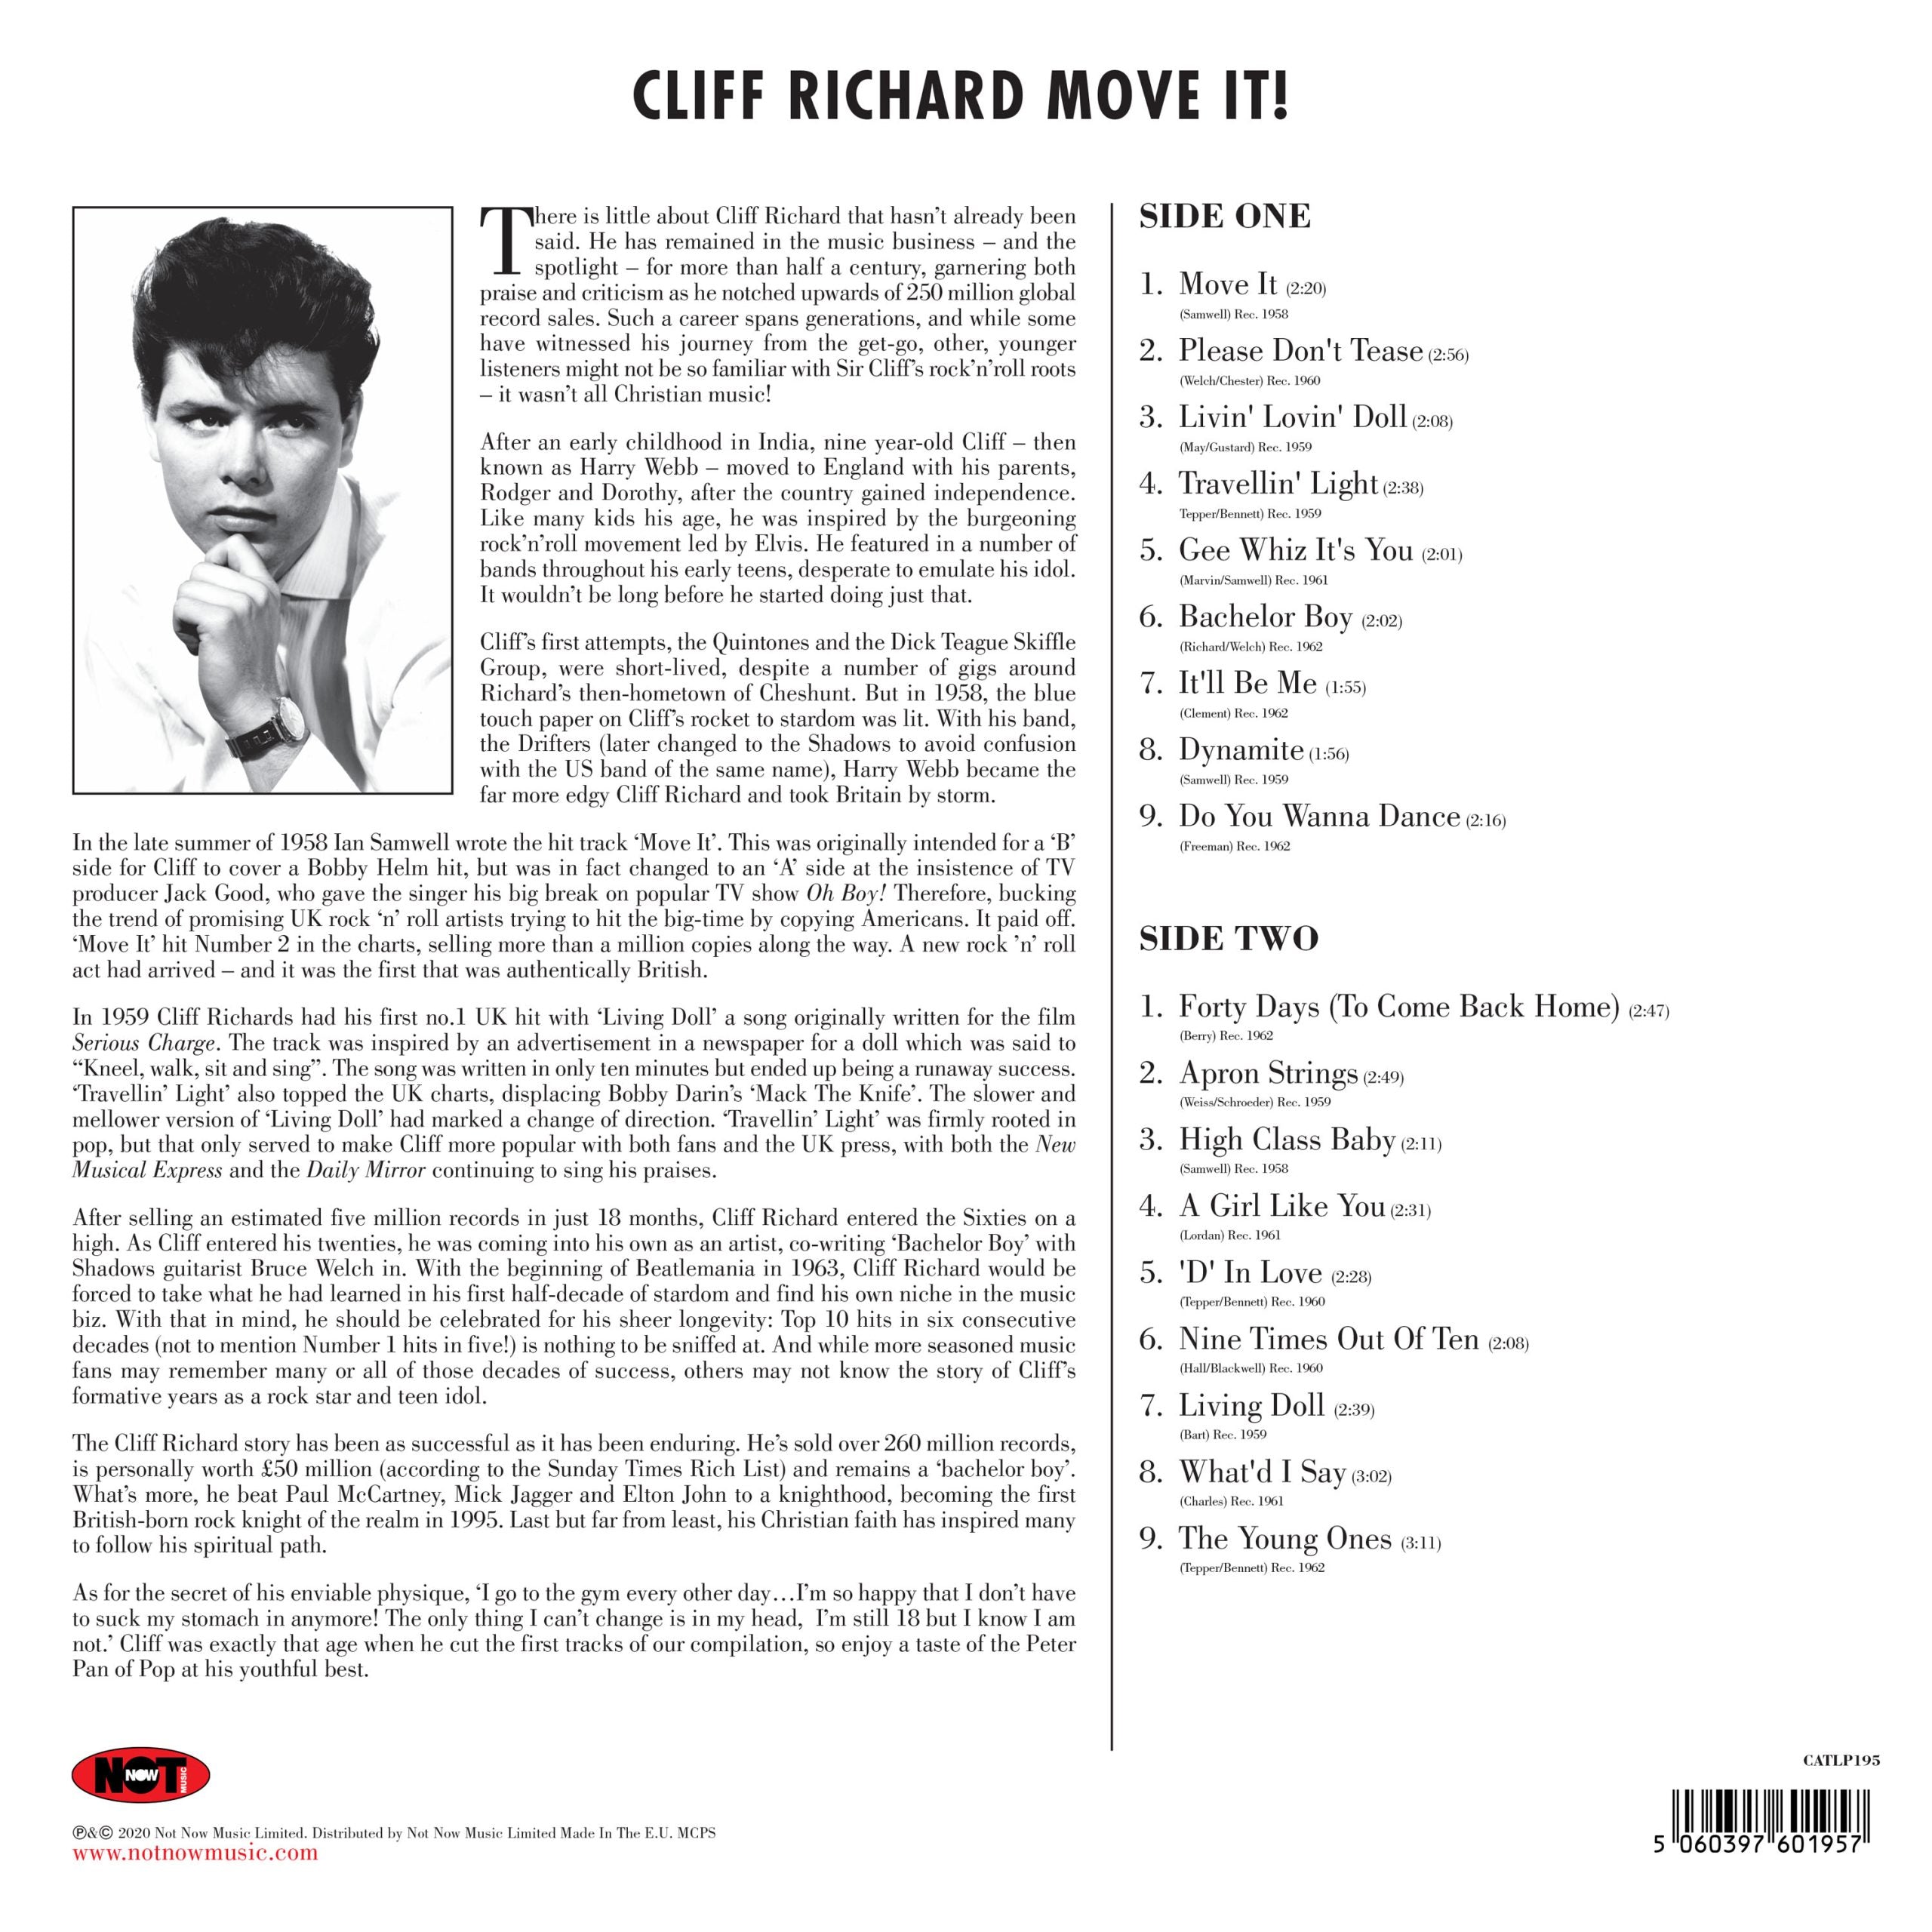 Cliff Richard  - Move It